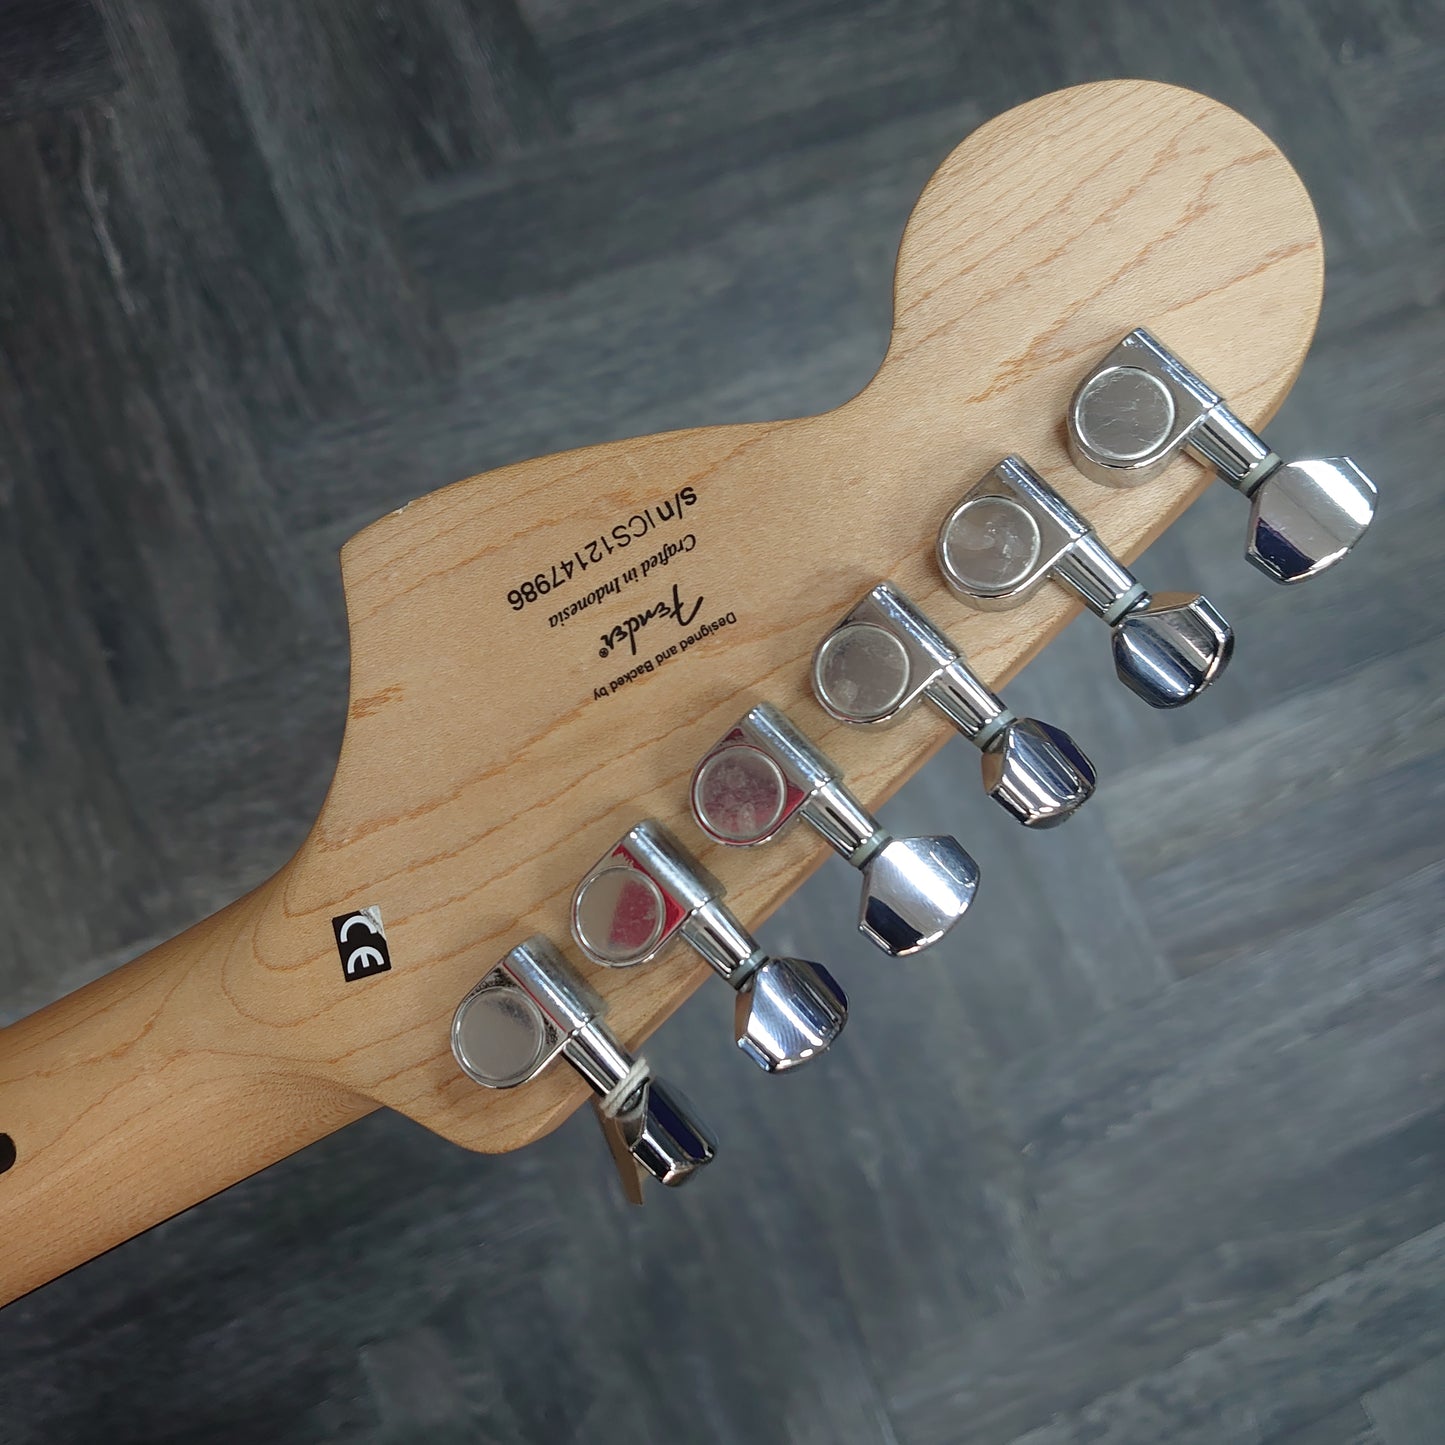 Squier Affinity Stratocaster HSS ~ 2-Tone Sunburst [2012]